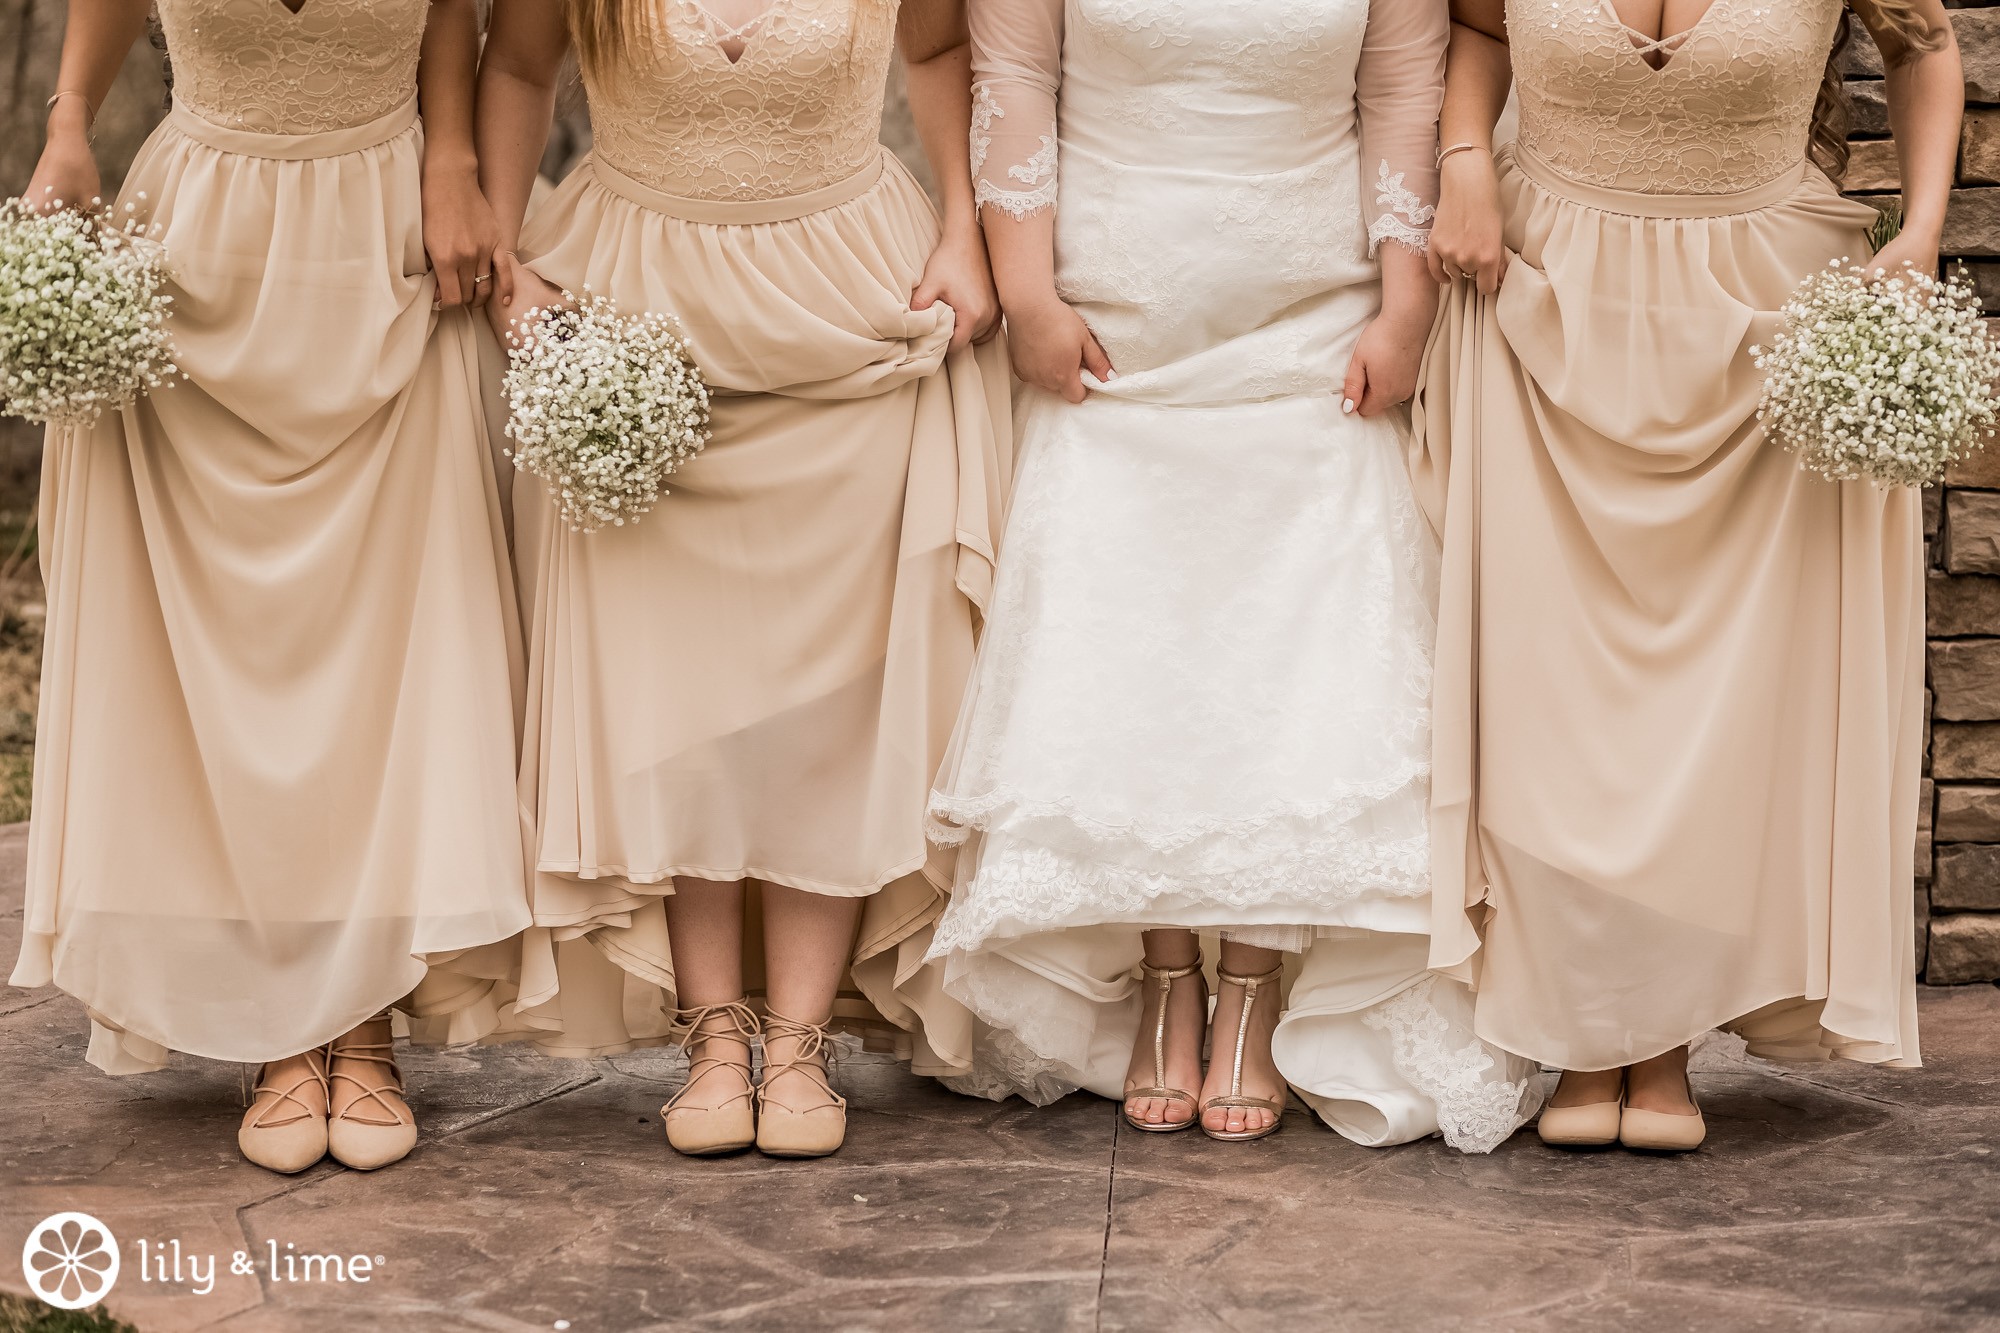 15 Ways to Have Impactful Minimalistic Wedding Decor